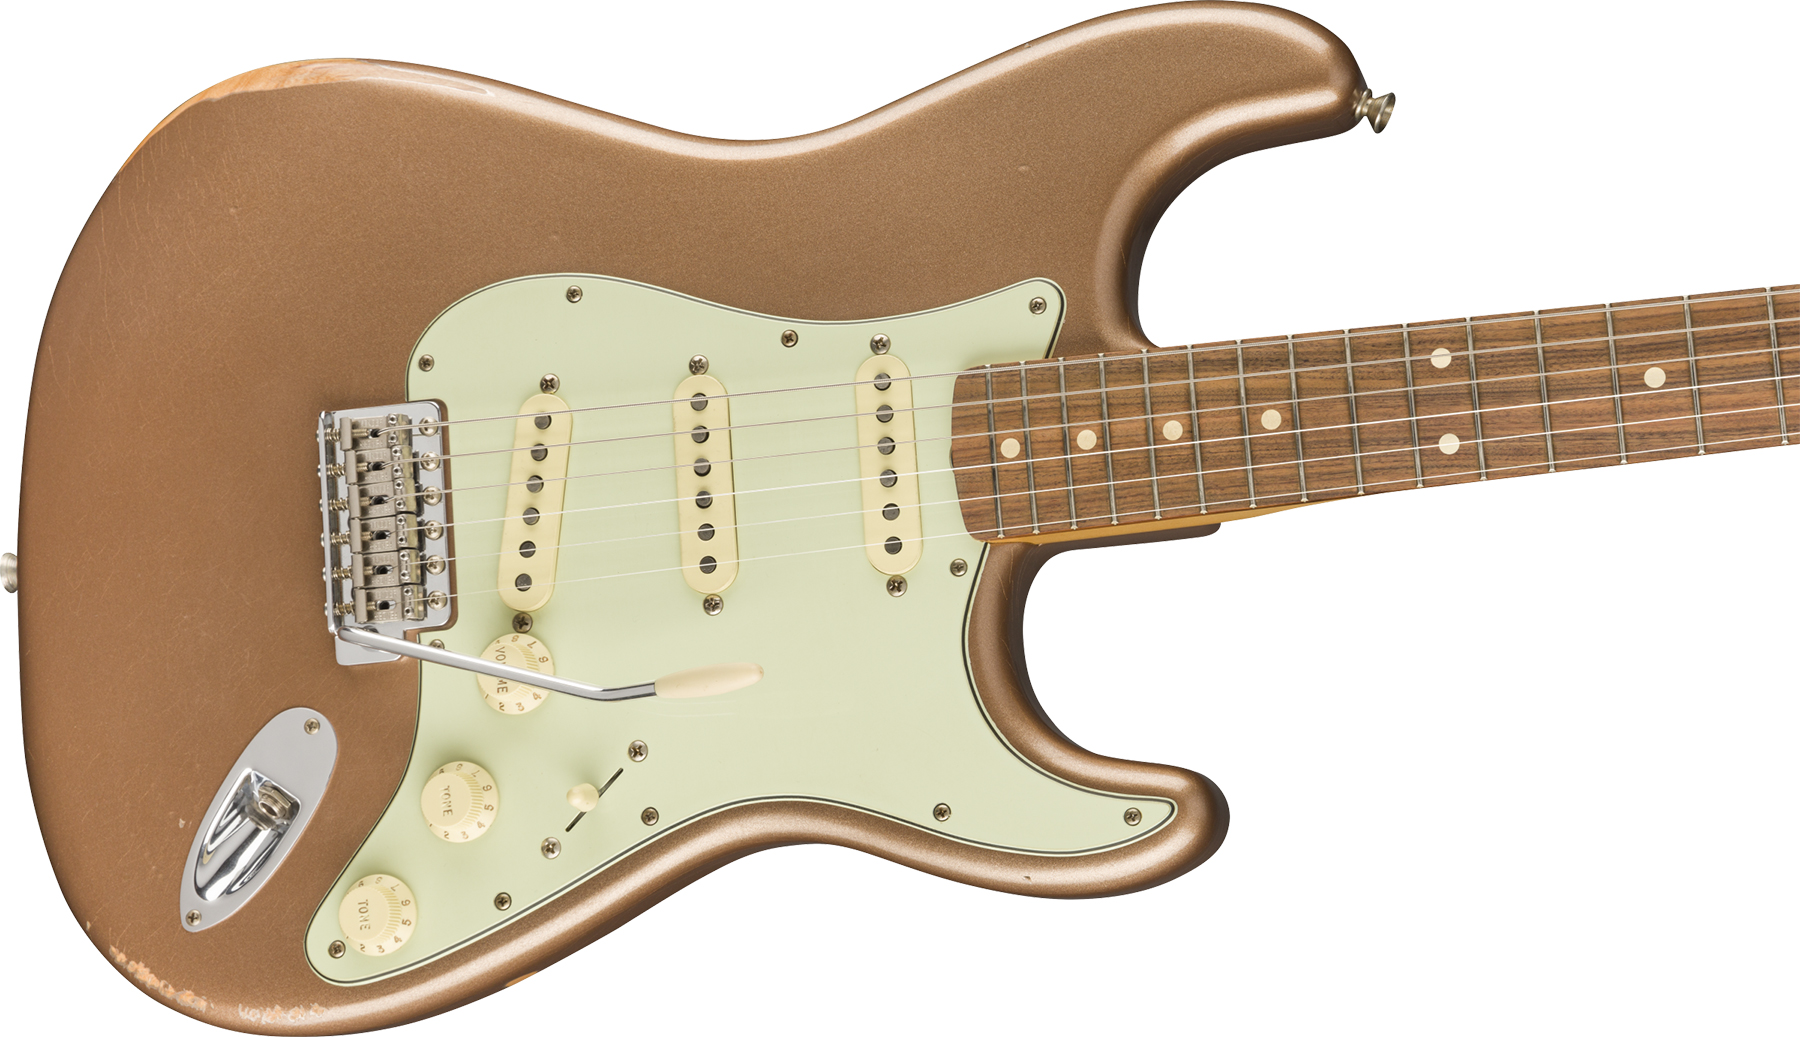 Fender Strat 60s Road Worn Mex Pf - Firemist Gold - Str shape electric guitar - Variation 2